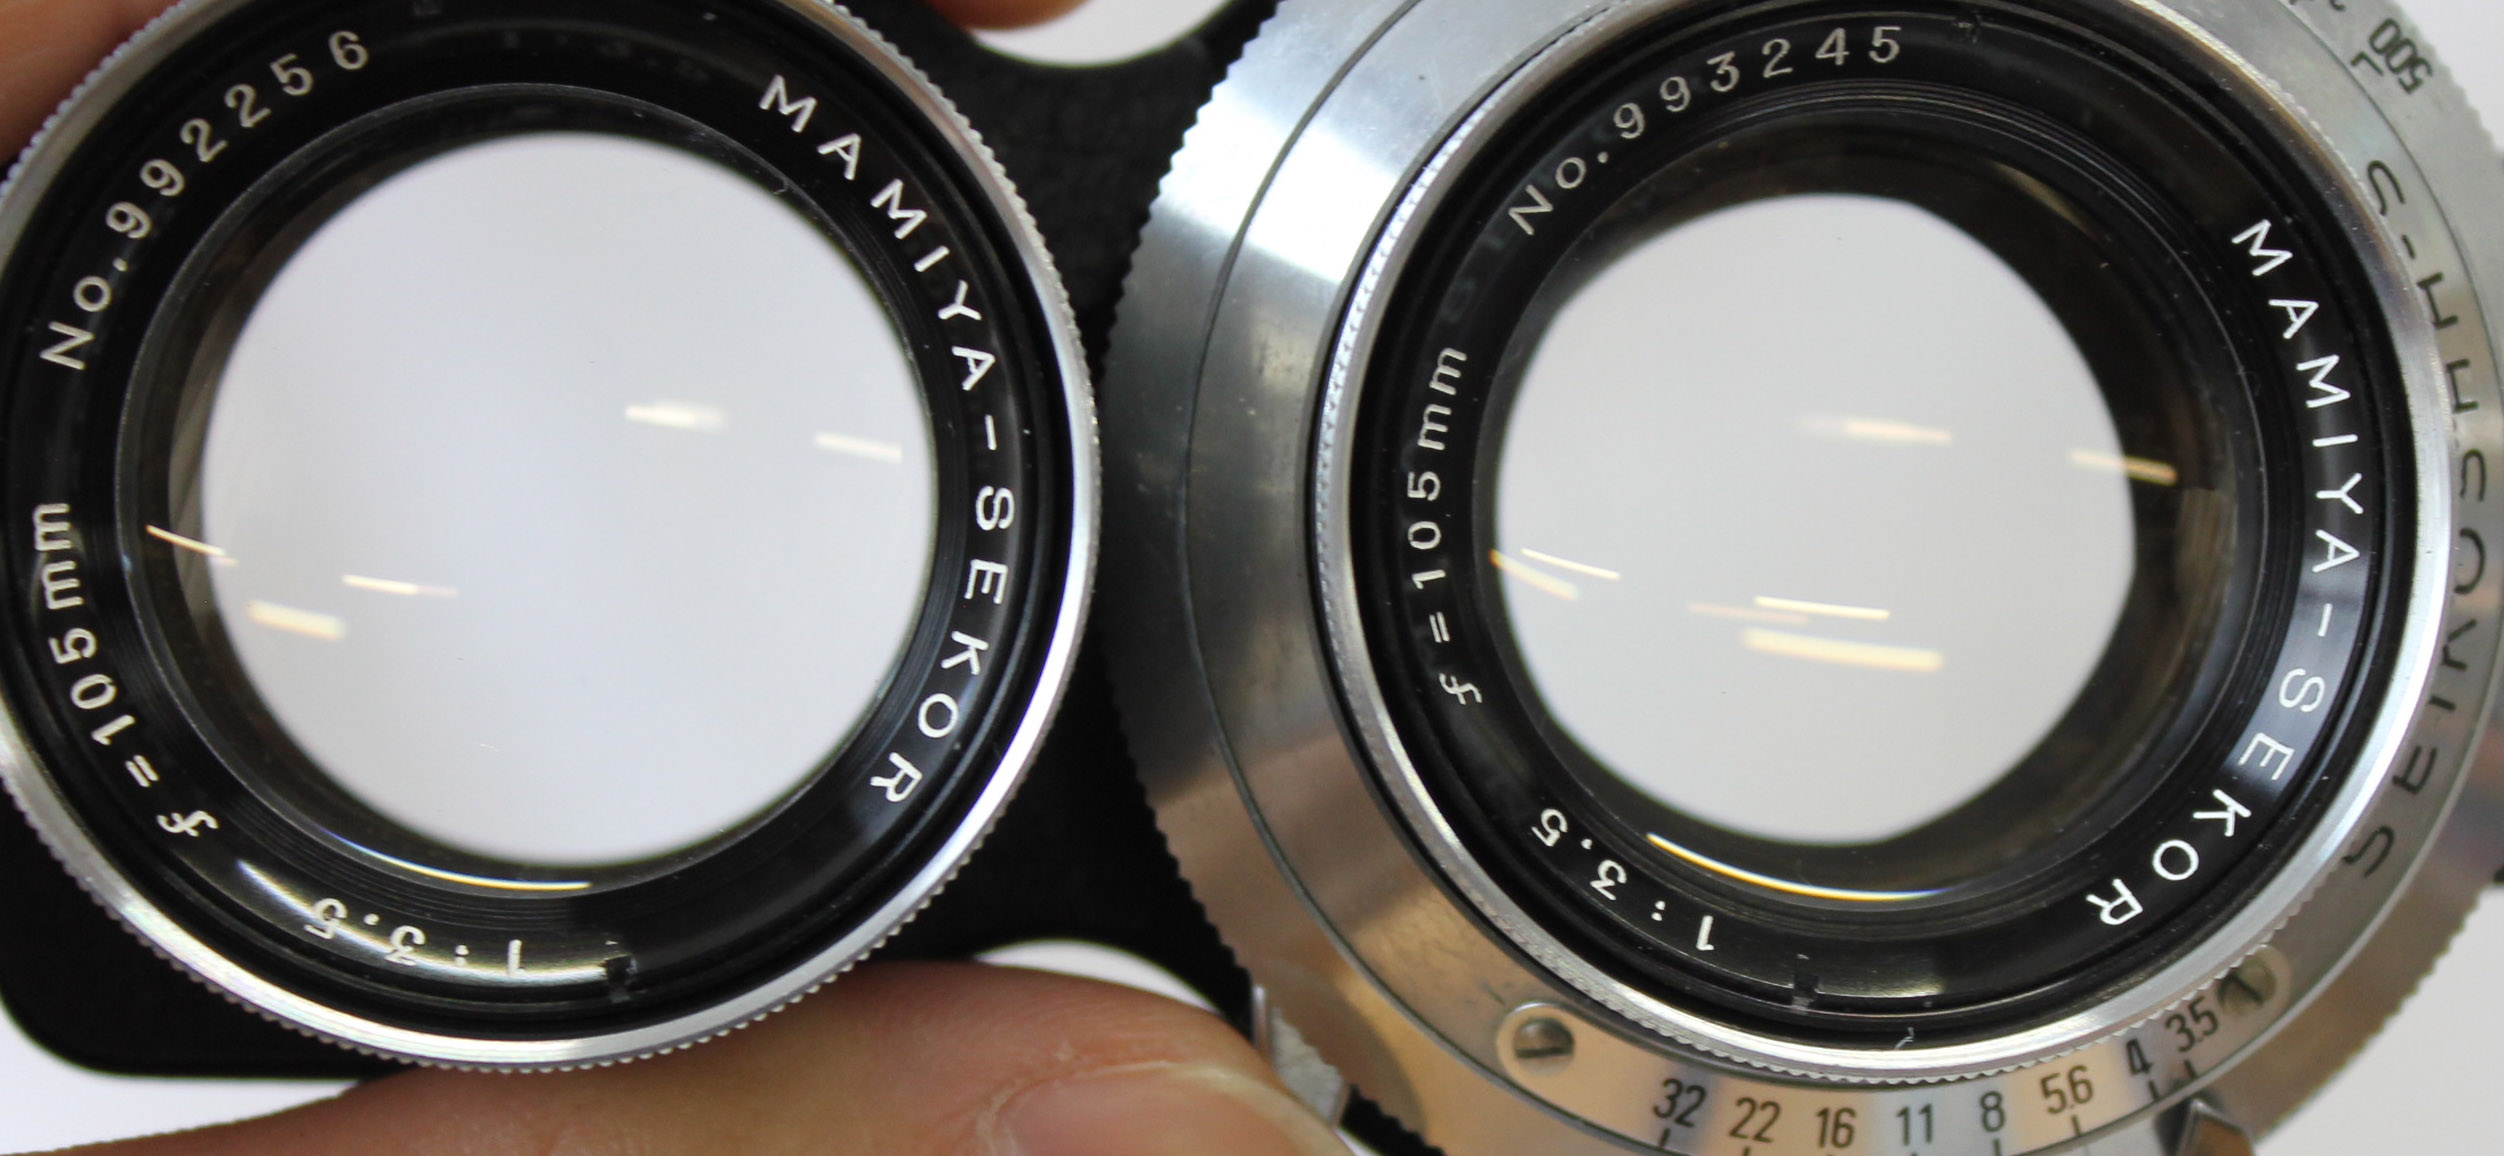  Mamiya C3 Professional Medium Format TLR Camera with 105mm F3.5 Lens from Japan Photo 12